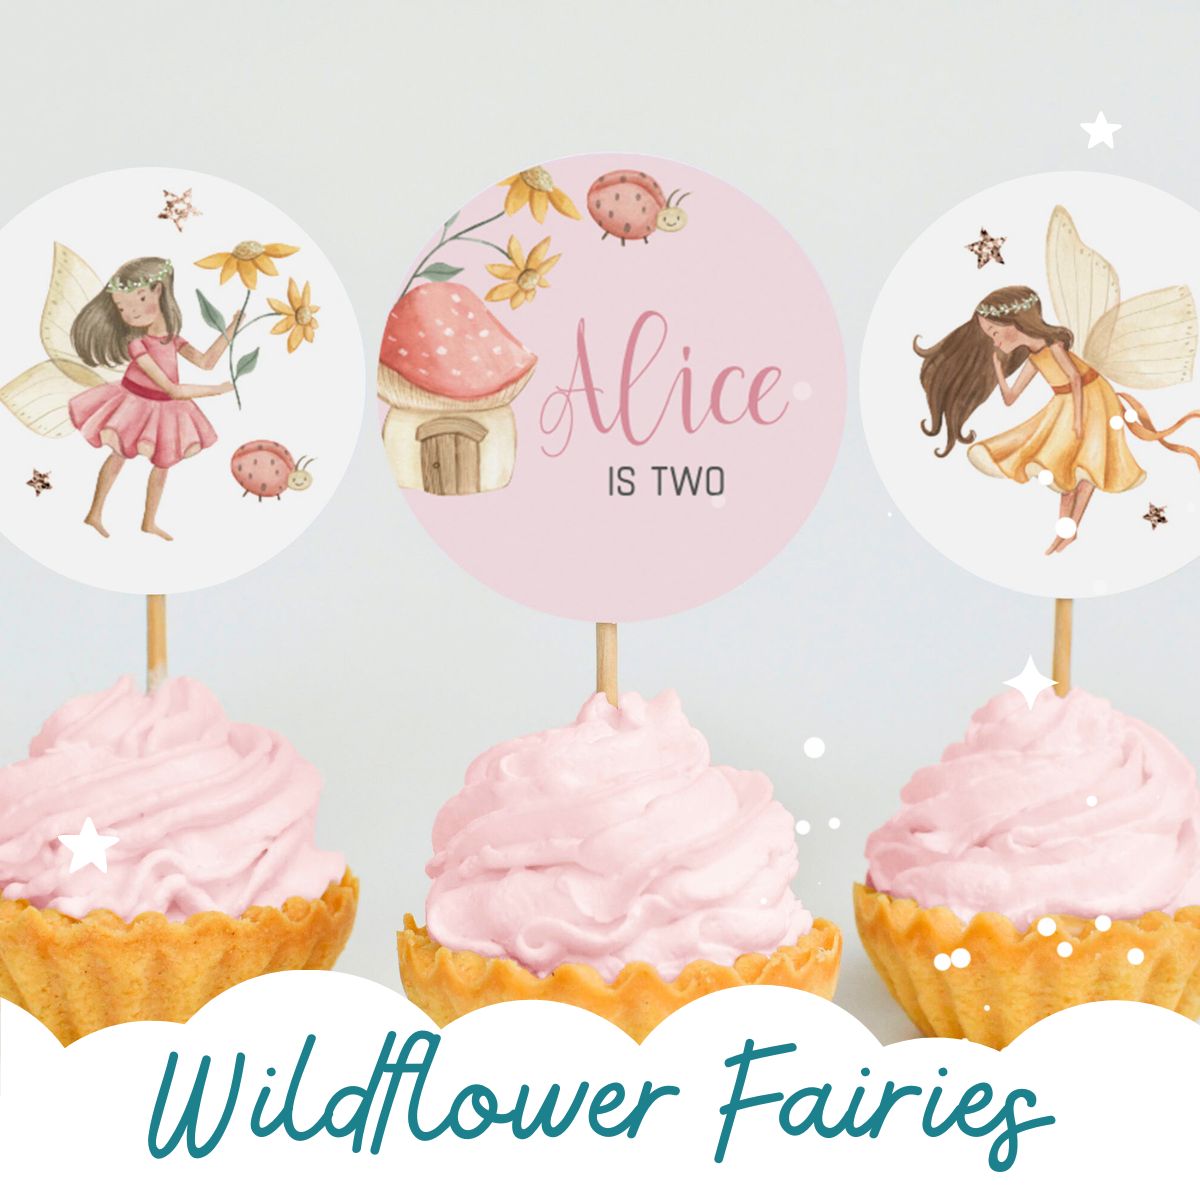 Wildflower Fairies